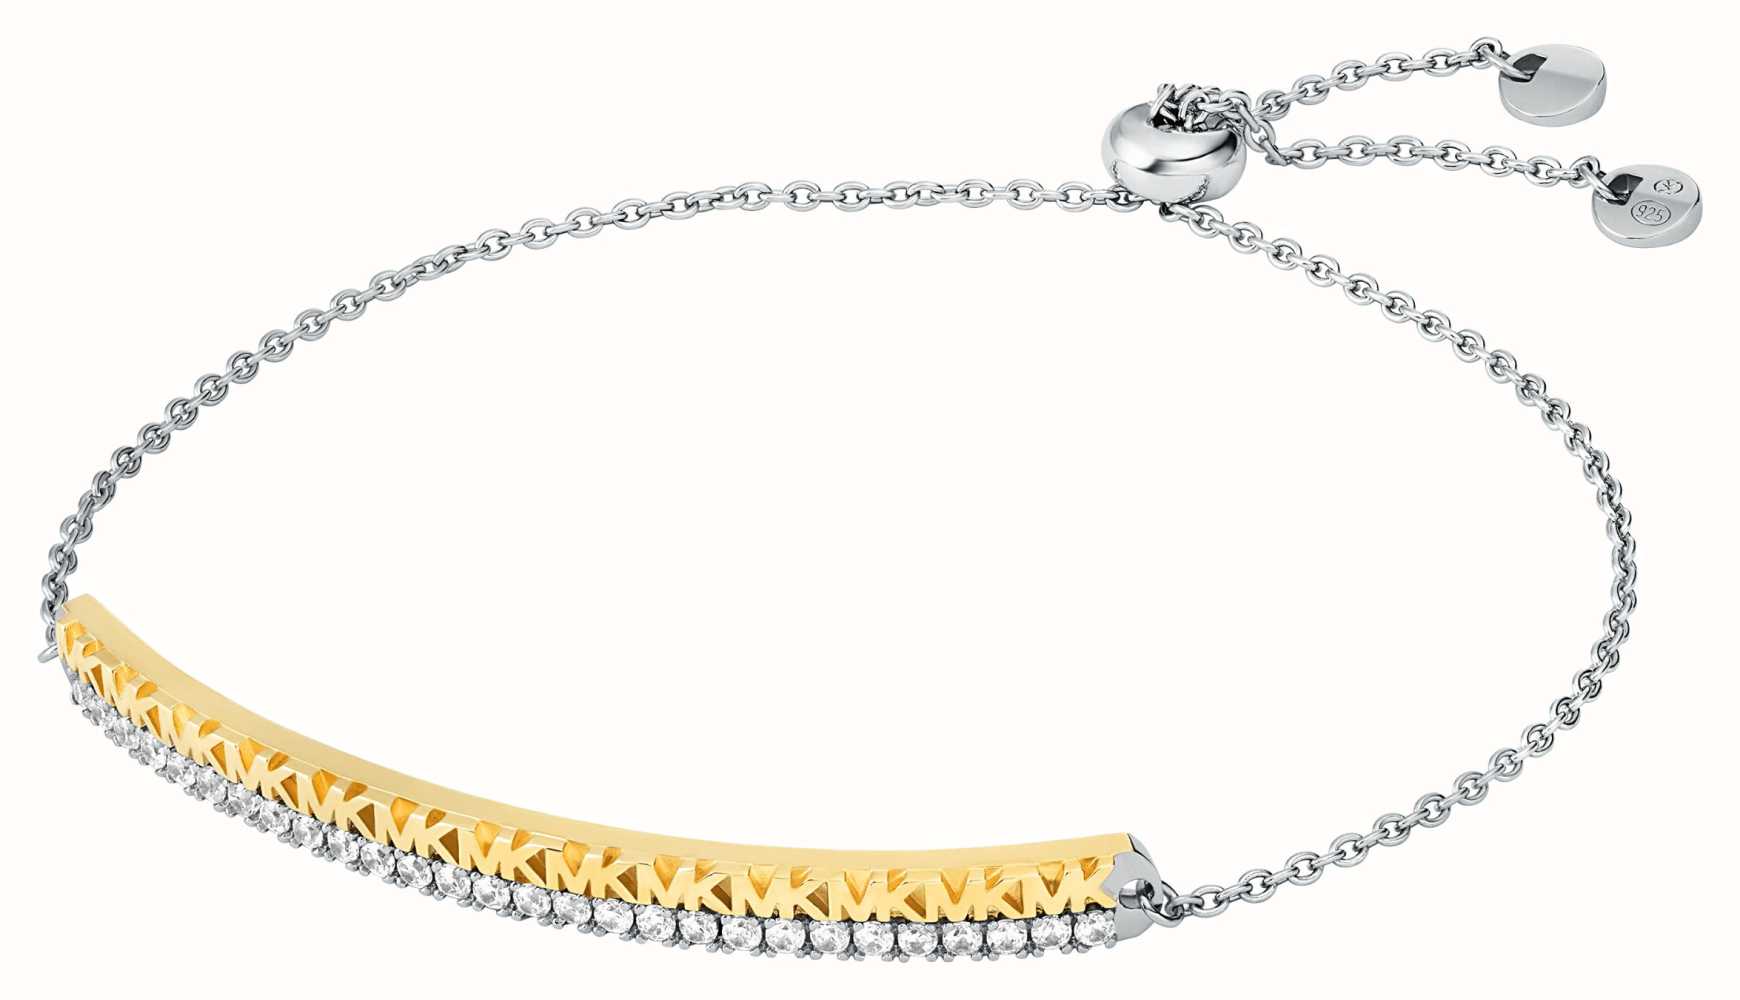 Michael Kors Macrame Micropave Crystal Diamond Bracelet | eBay